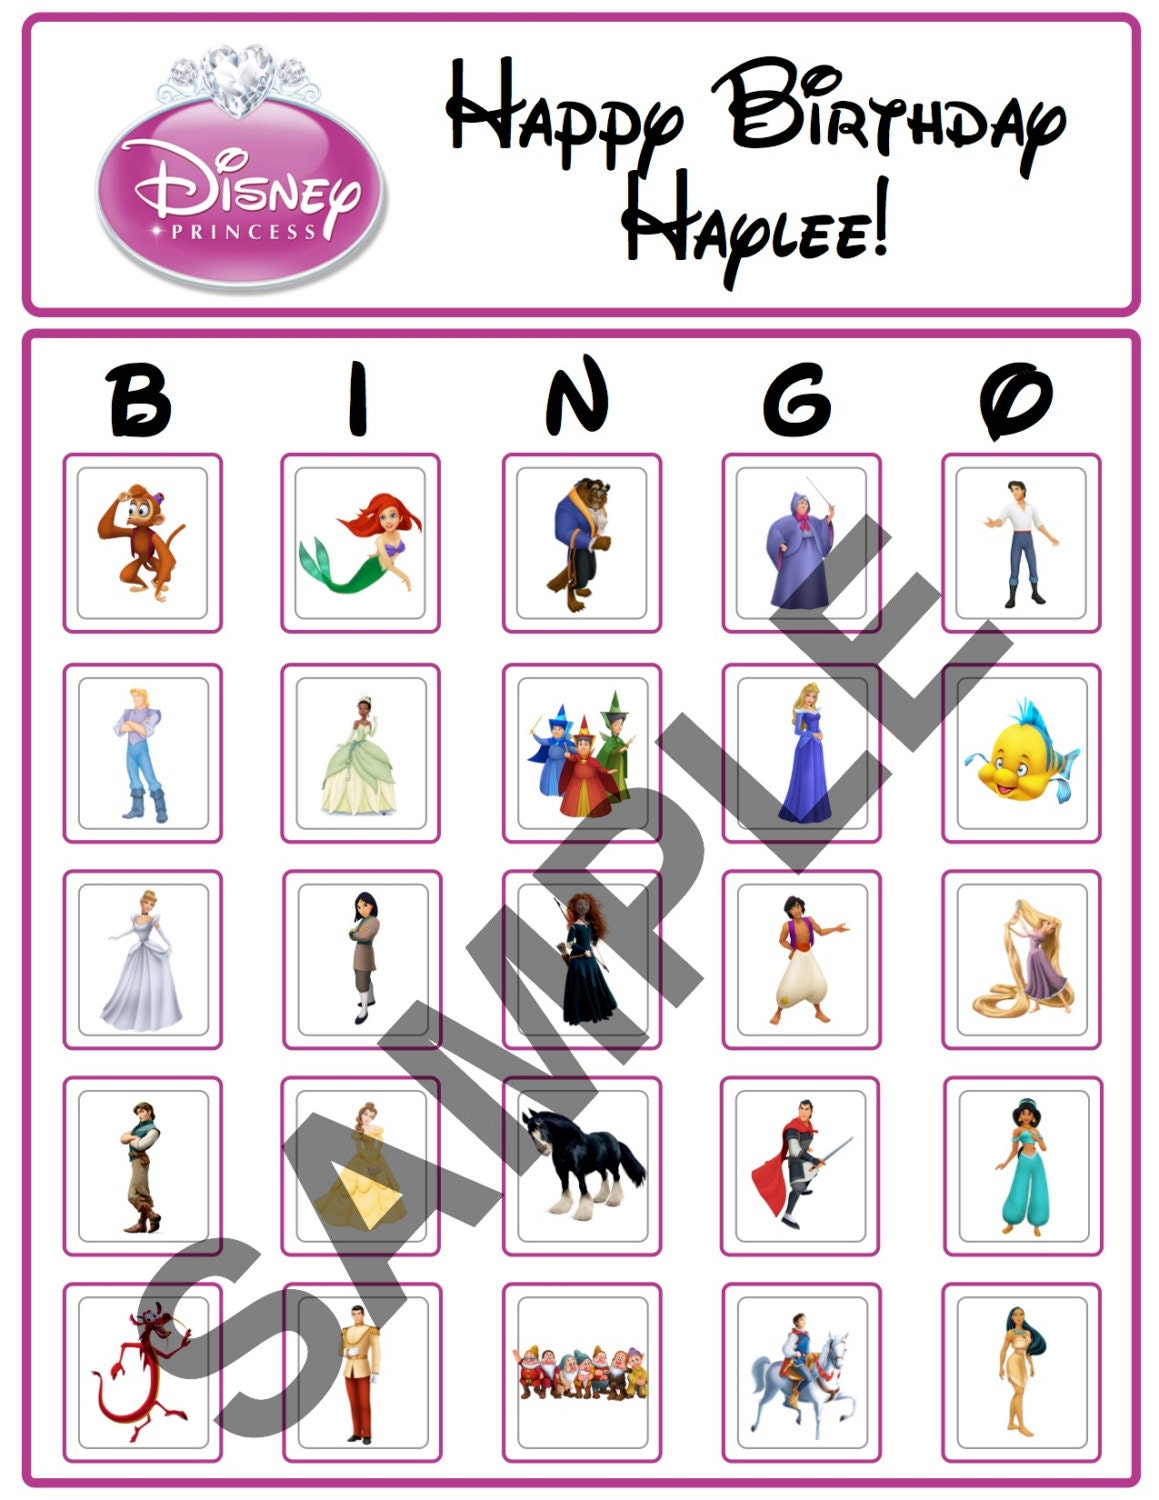 bingo-disney-princess-party-game